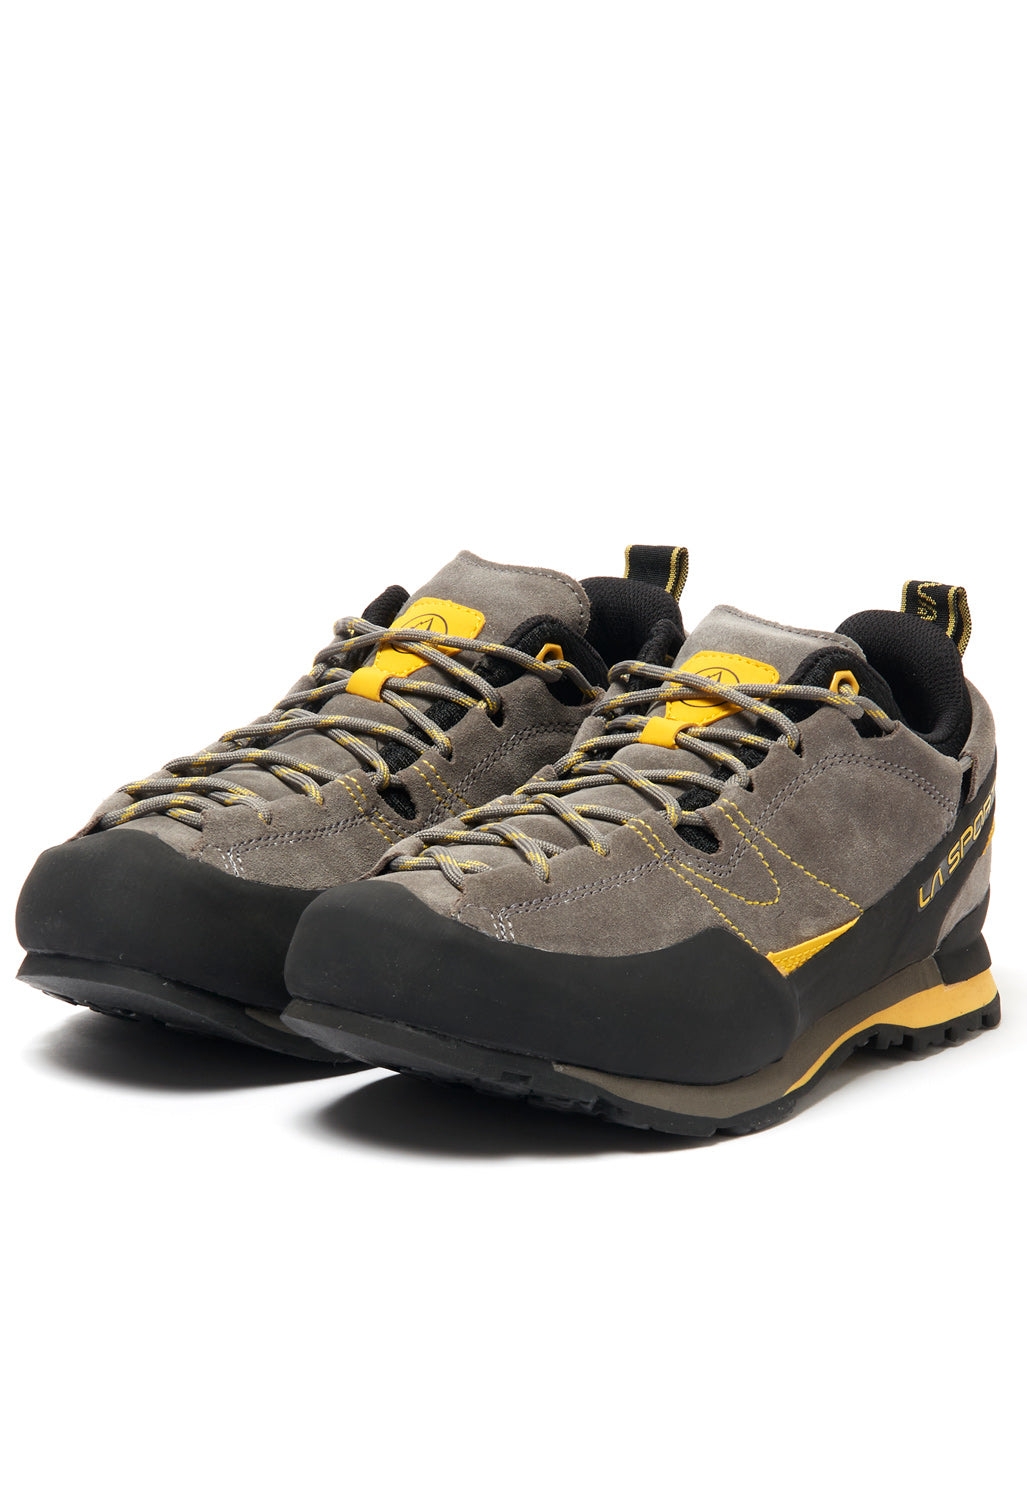 La Sportiva Boulder X Men's Shoes - Grey/Yellow